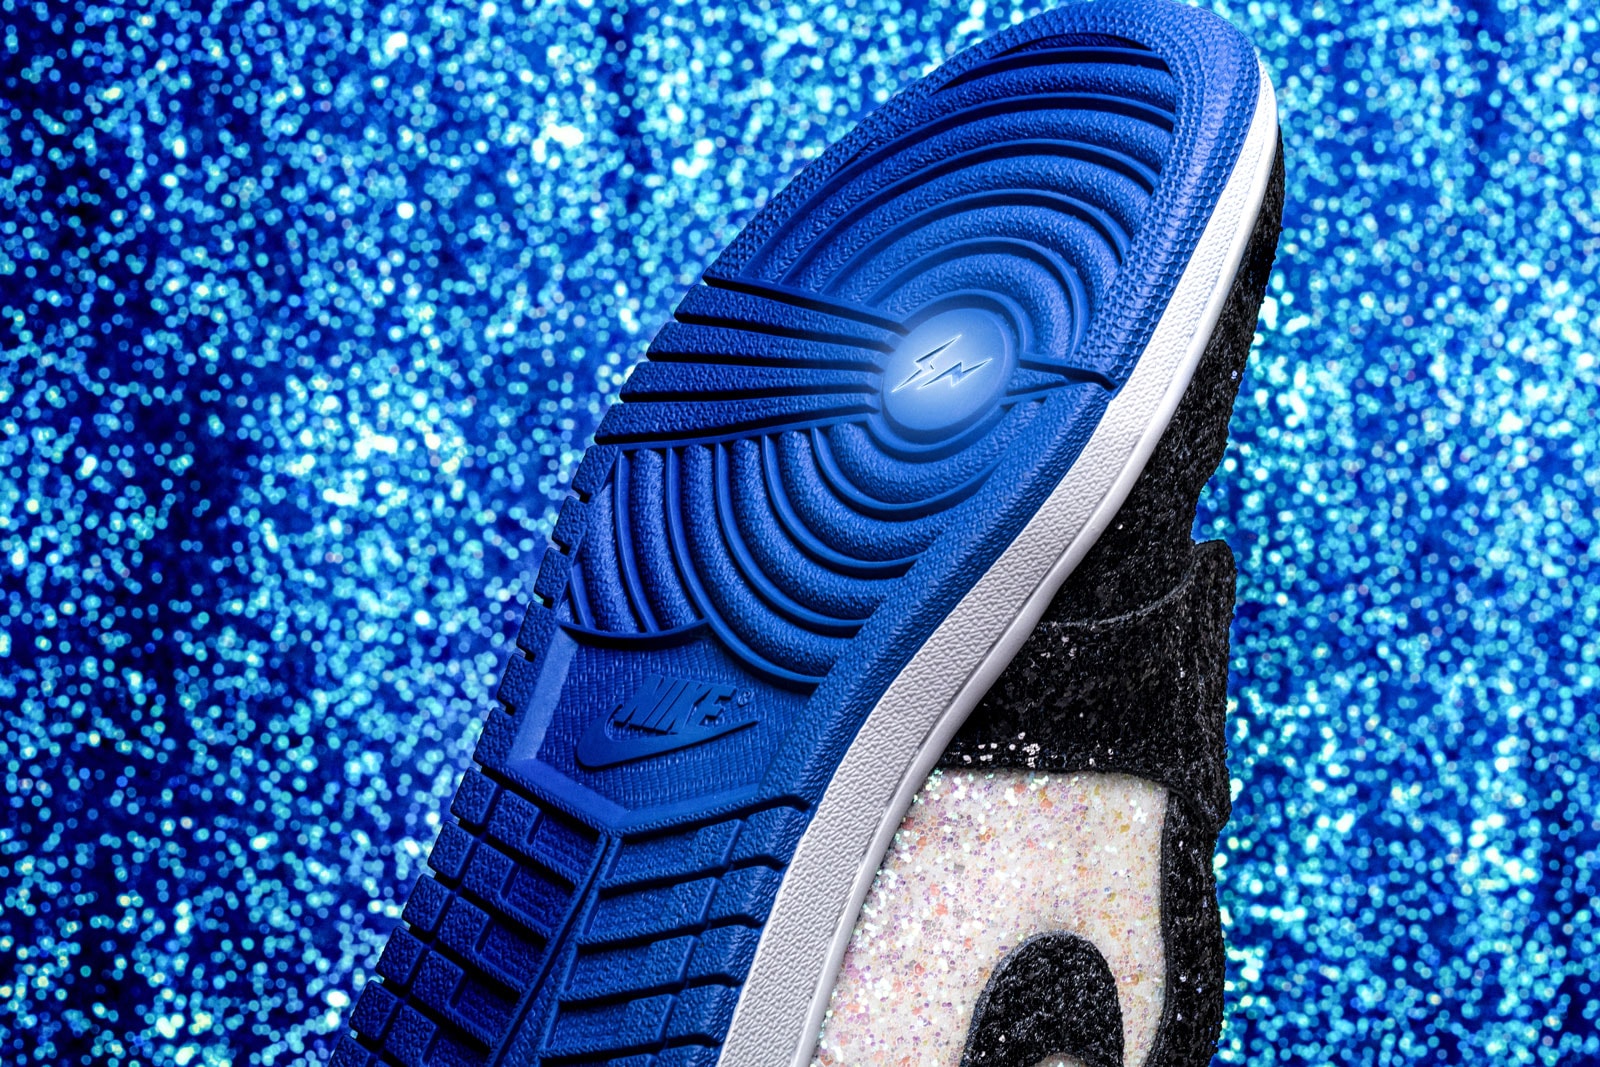 The Shoe Surgeon fragment design Blue Black White Pearl Glitter Air Jordan 1 Sneaker